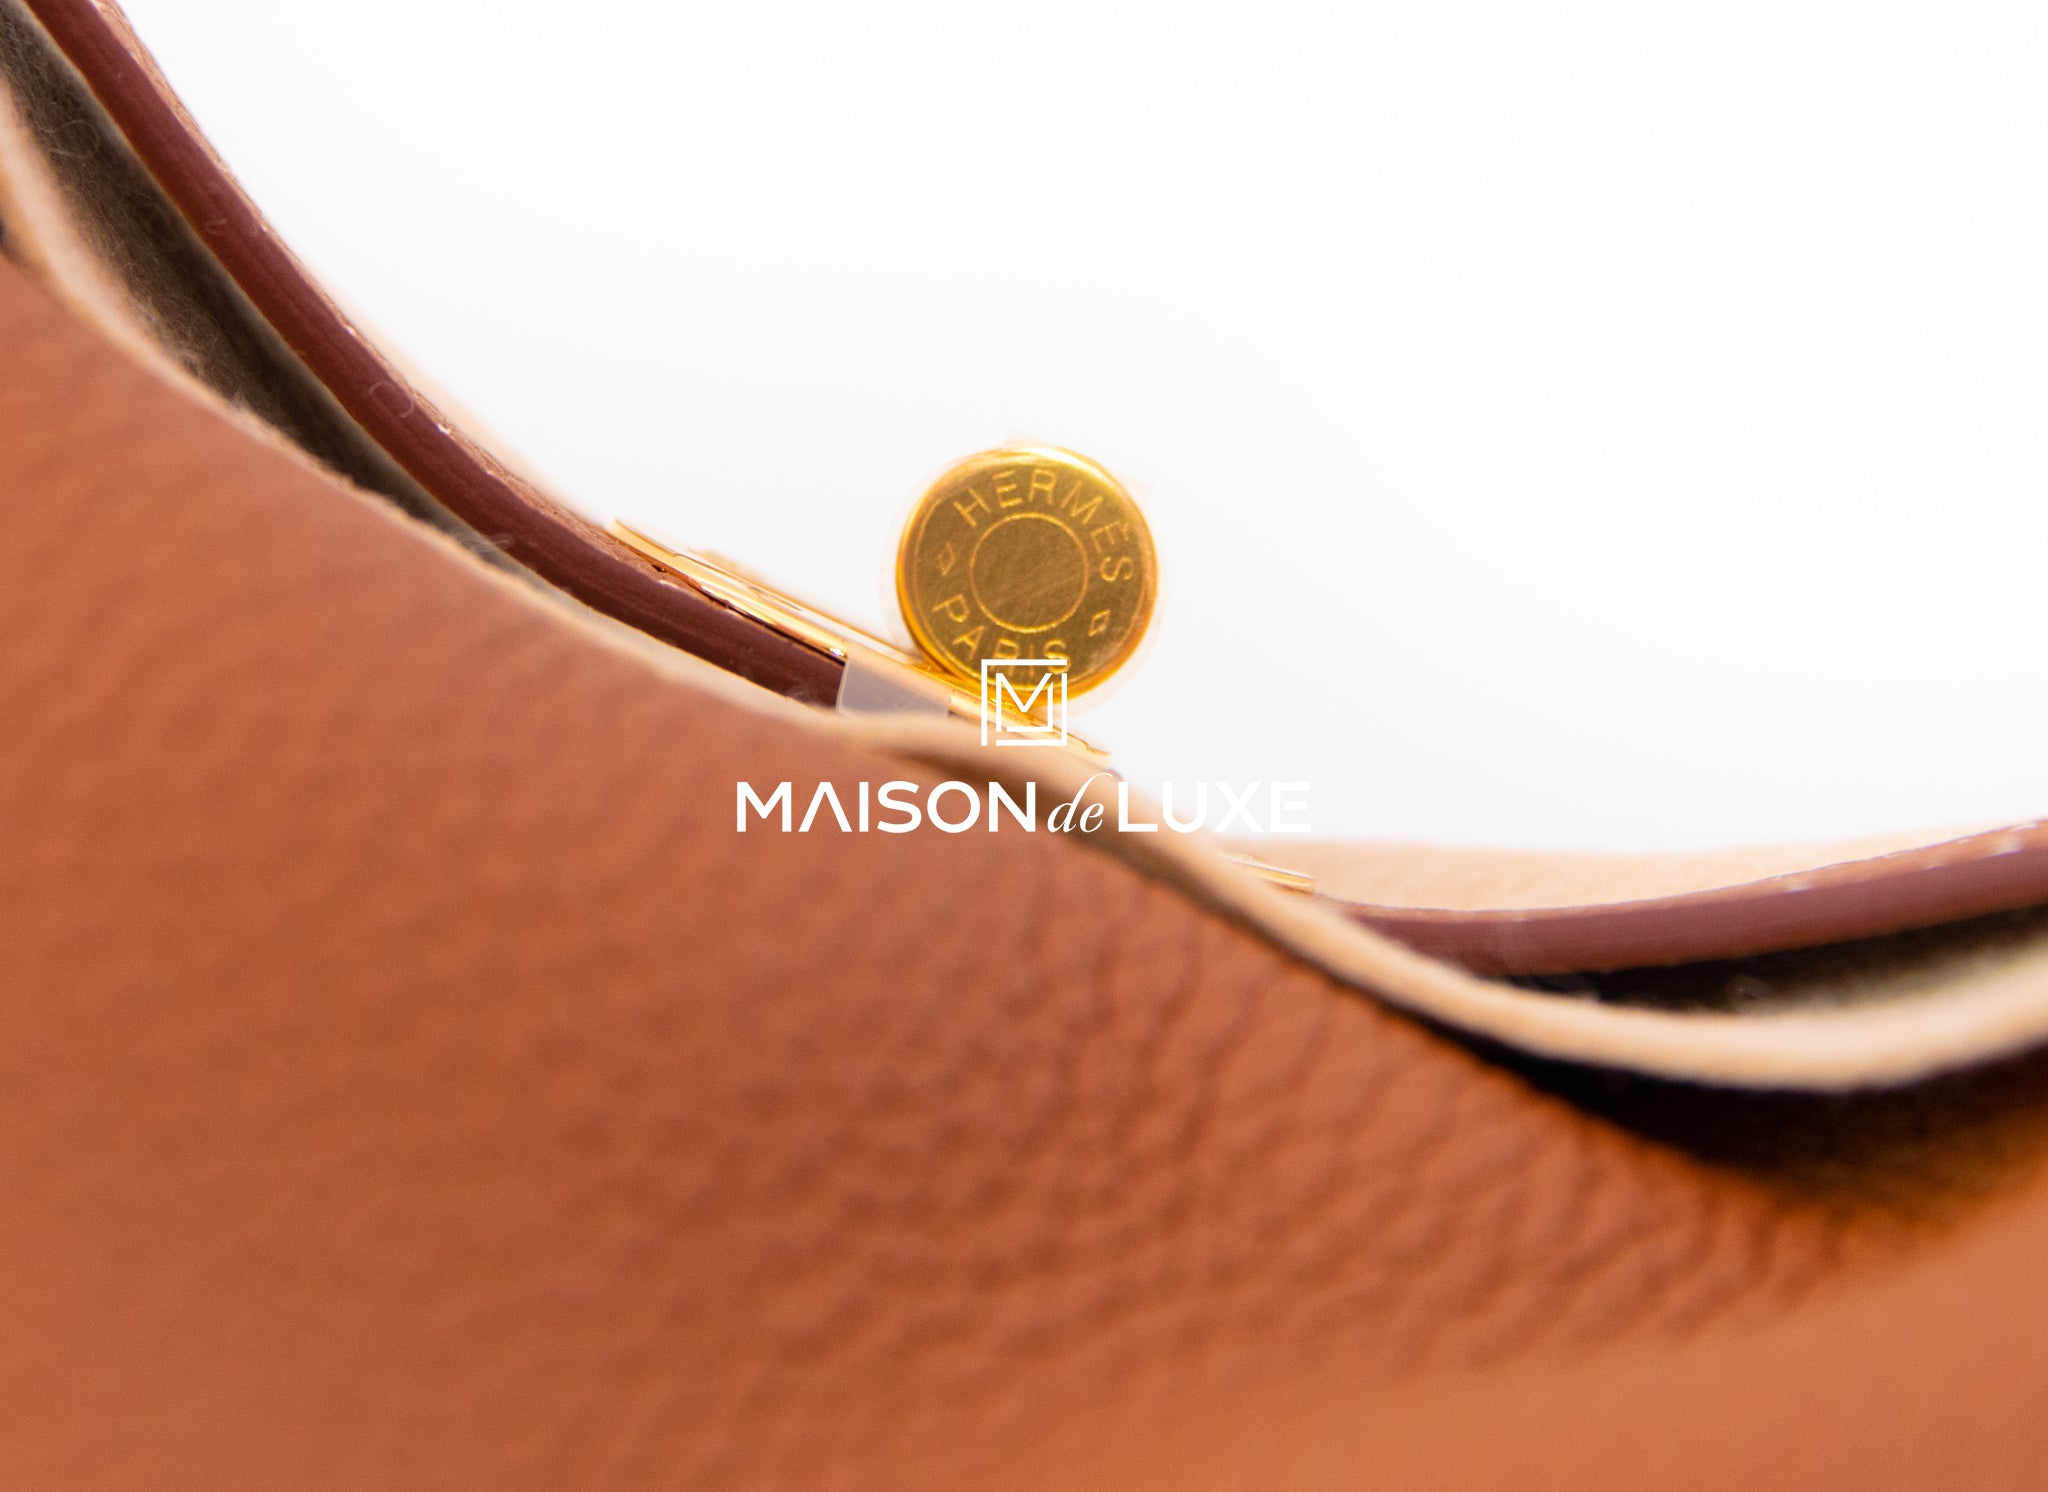 Hermès Lindy 26 Taurillon Clemence Leather Handbag-Gold Gold